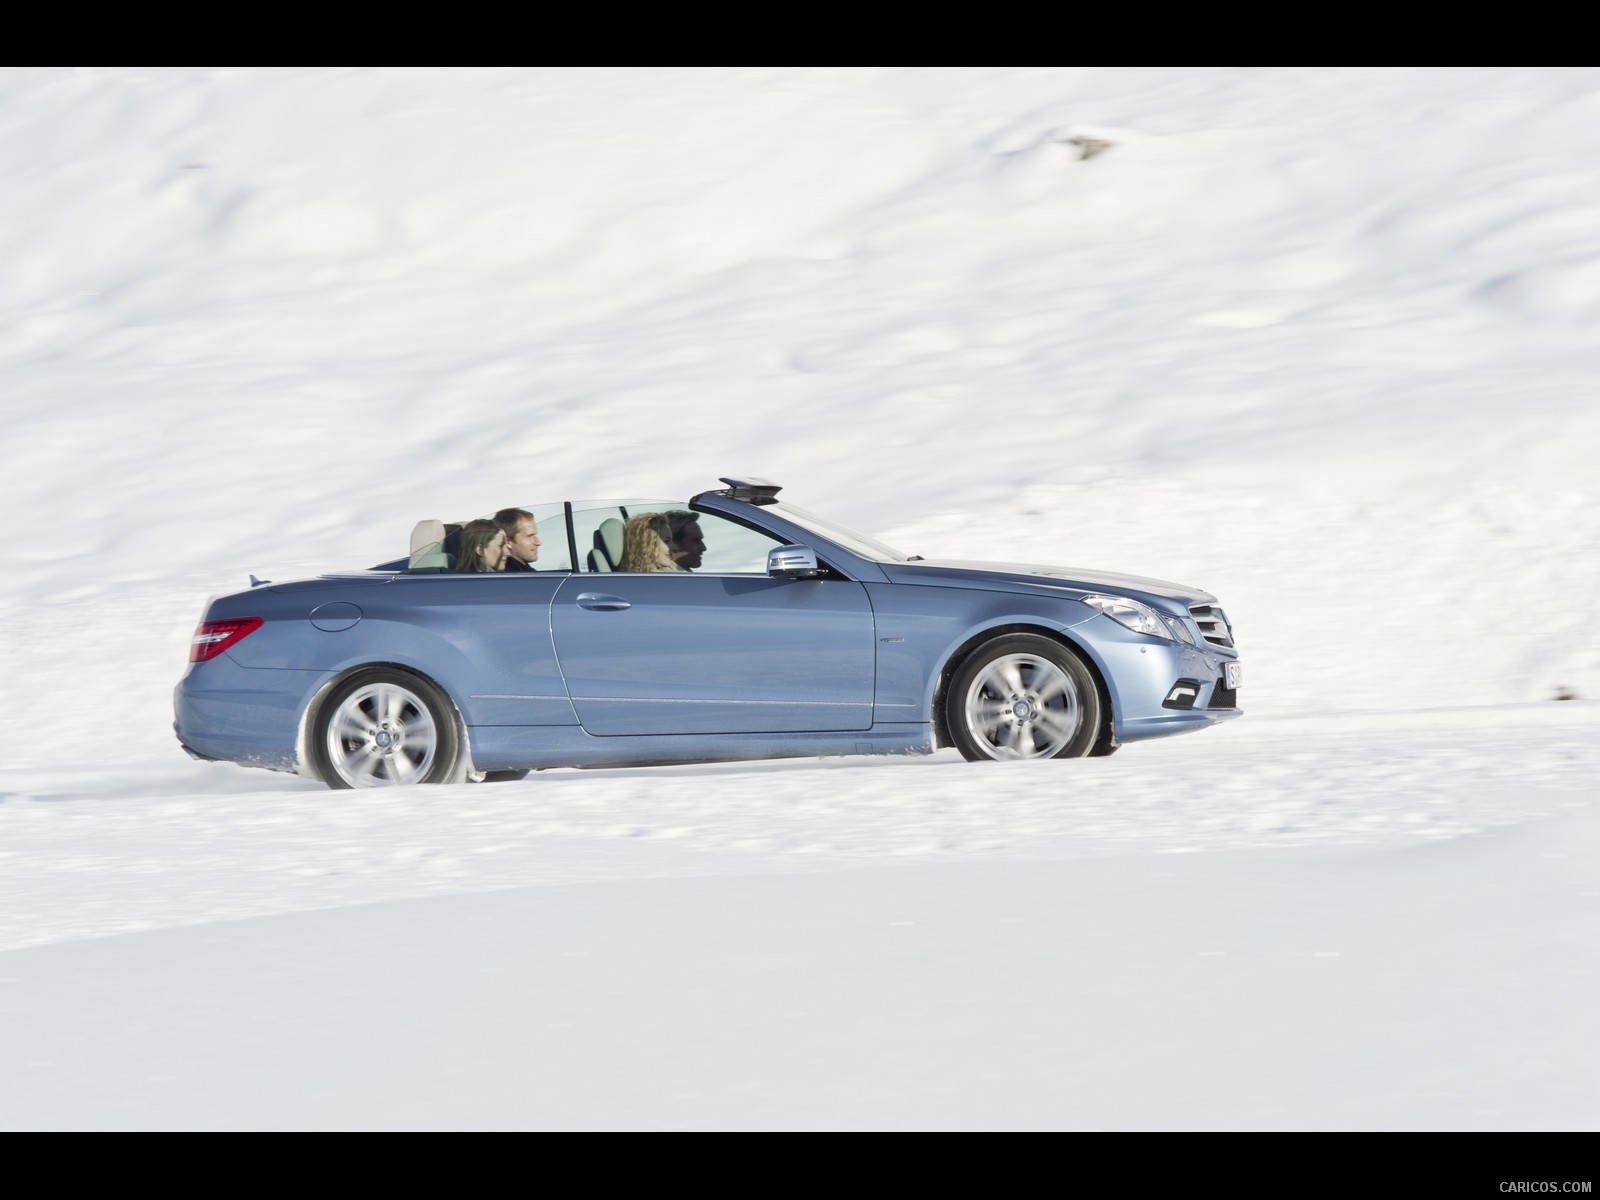 Mercedes-Benz E-Class Cabriolet - On Snow - , #95 of 165